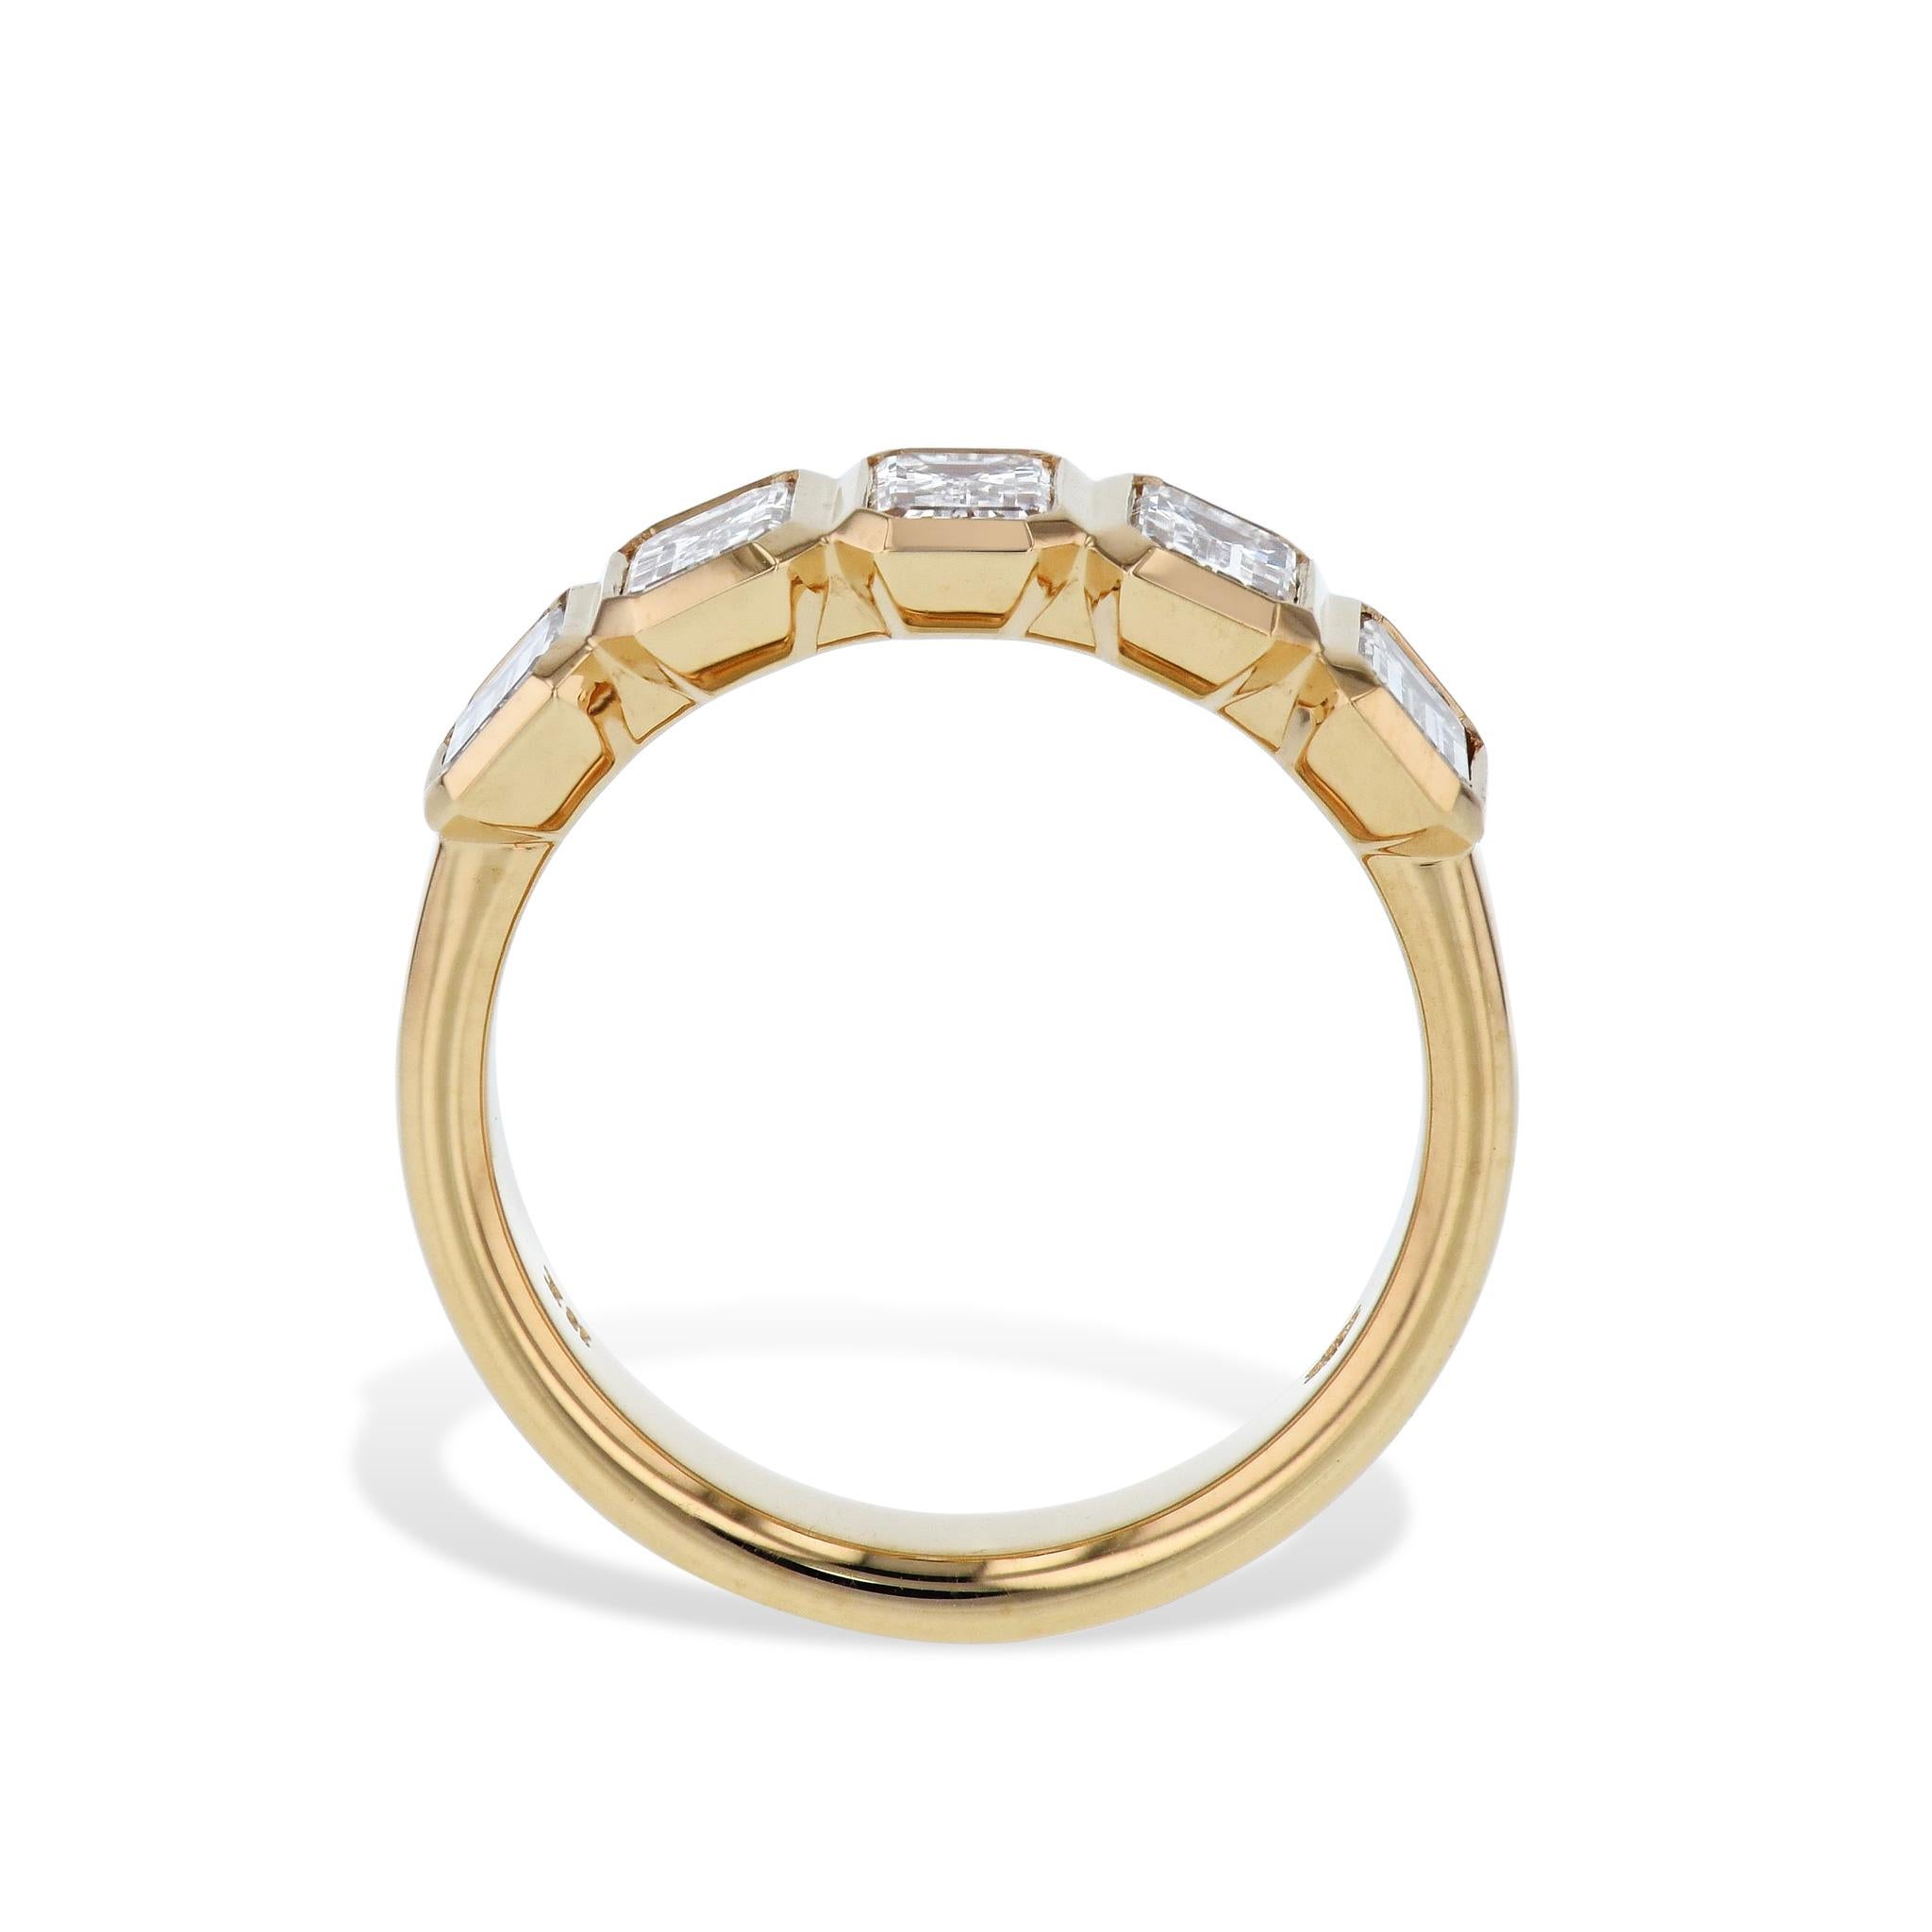 5 Emerald Cut Diamond Yellow Gold Anniversary Ring Handmade In New Condition For Sale In Miami, FL